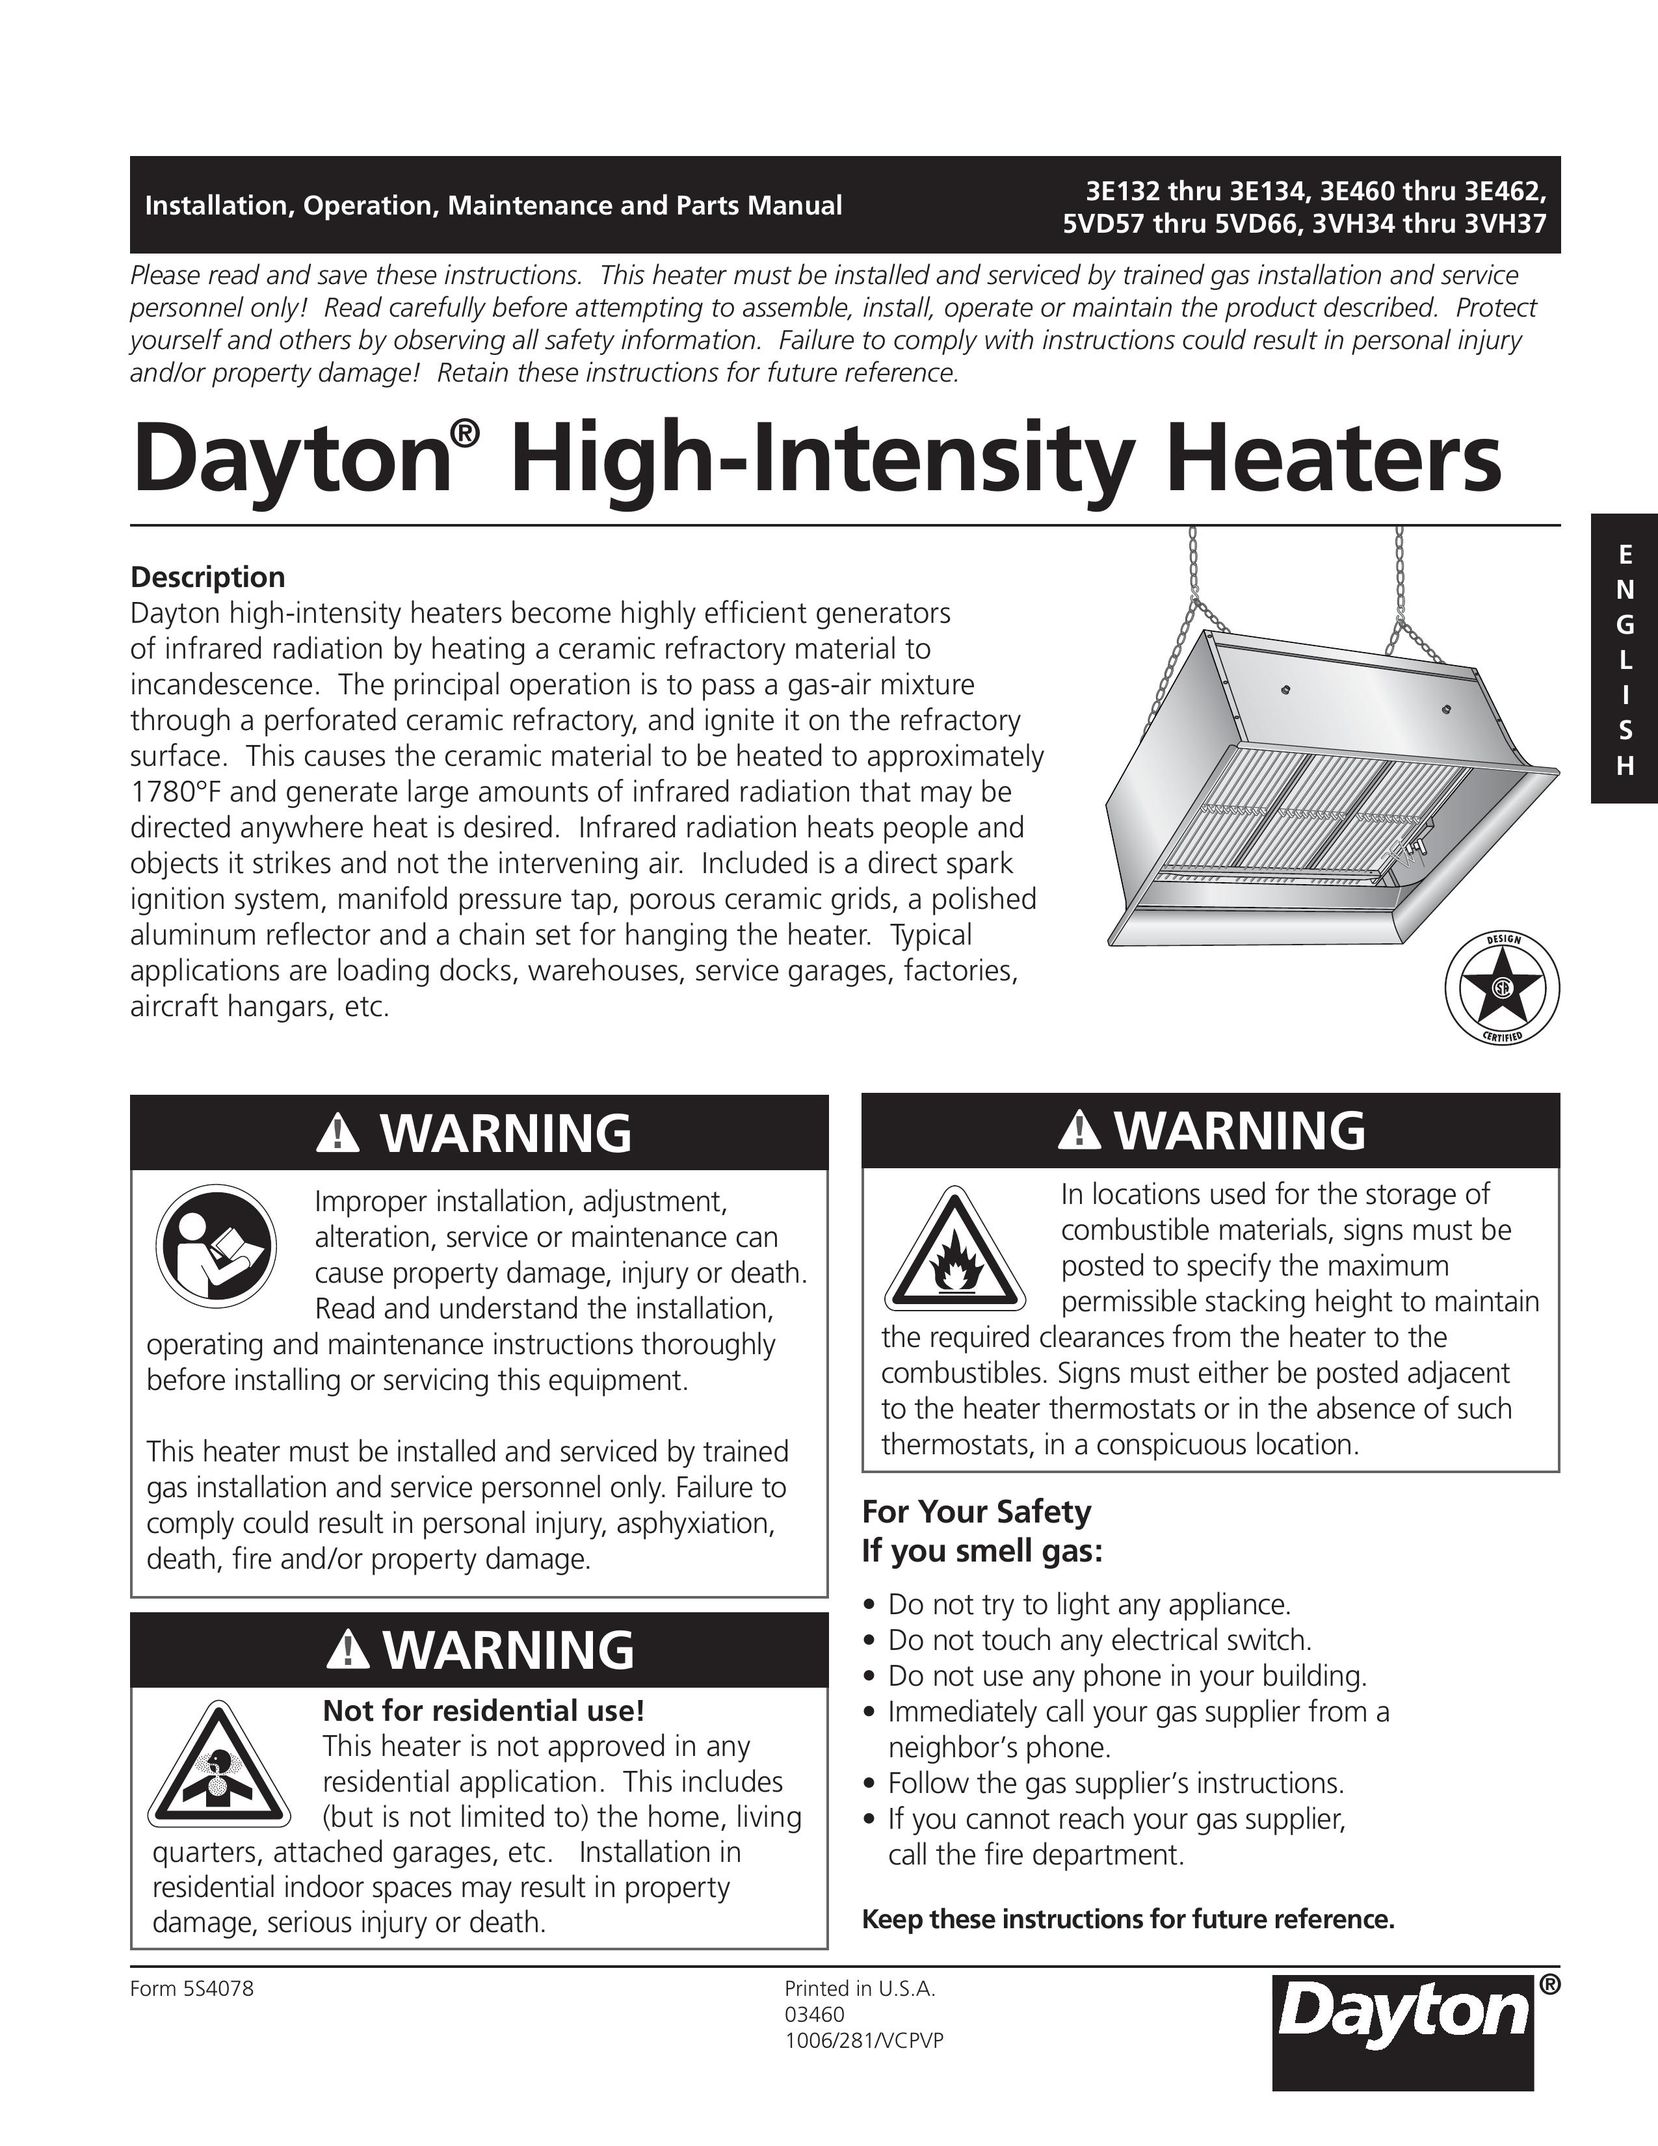 Dayton 3.00E+132 Electric Heater User Manual